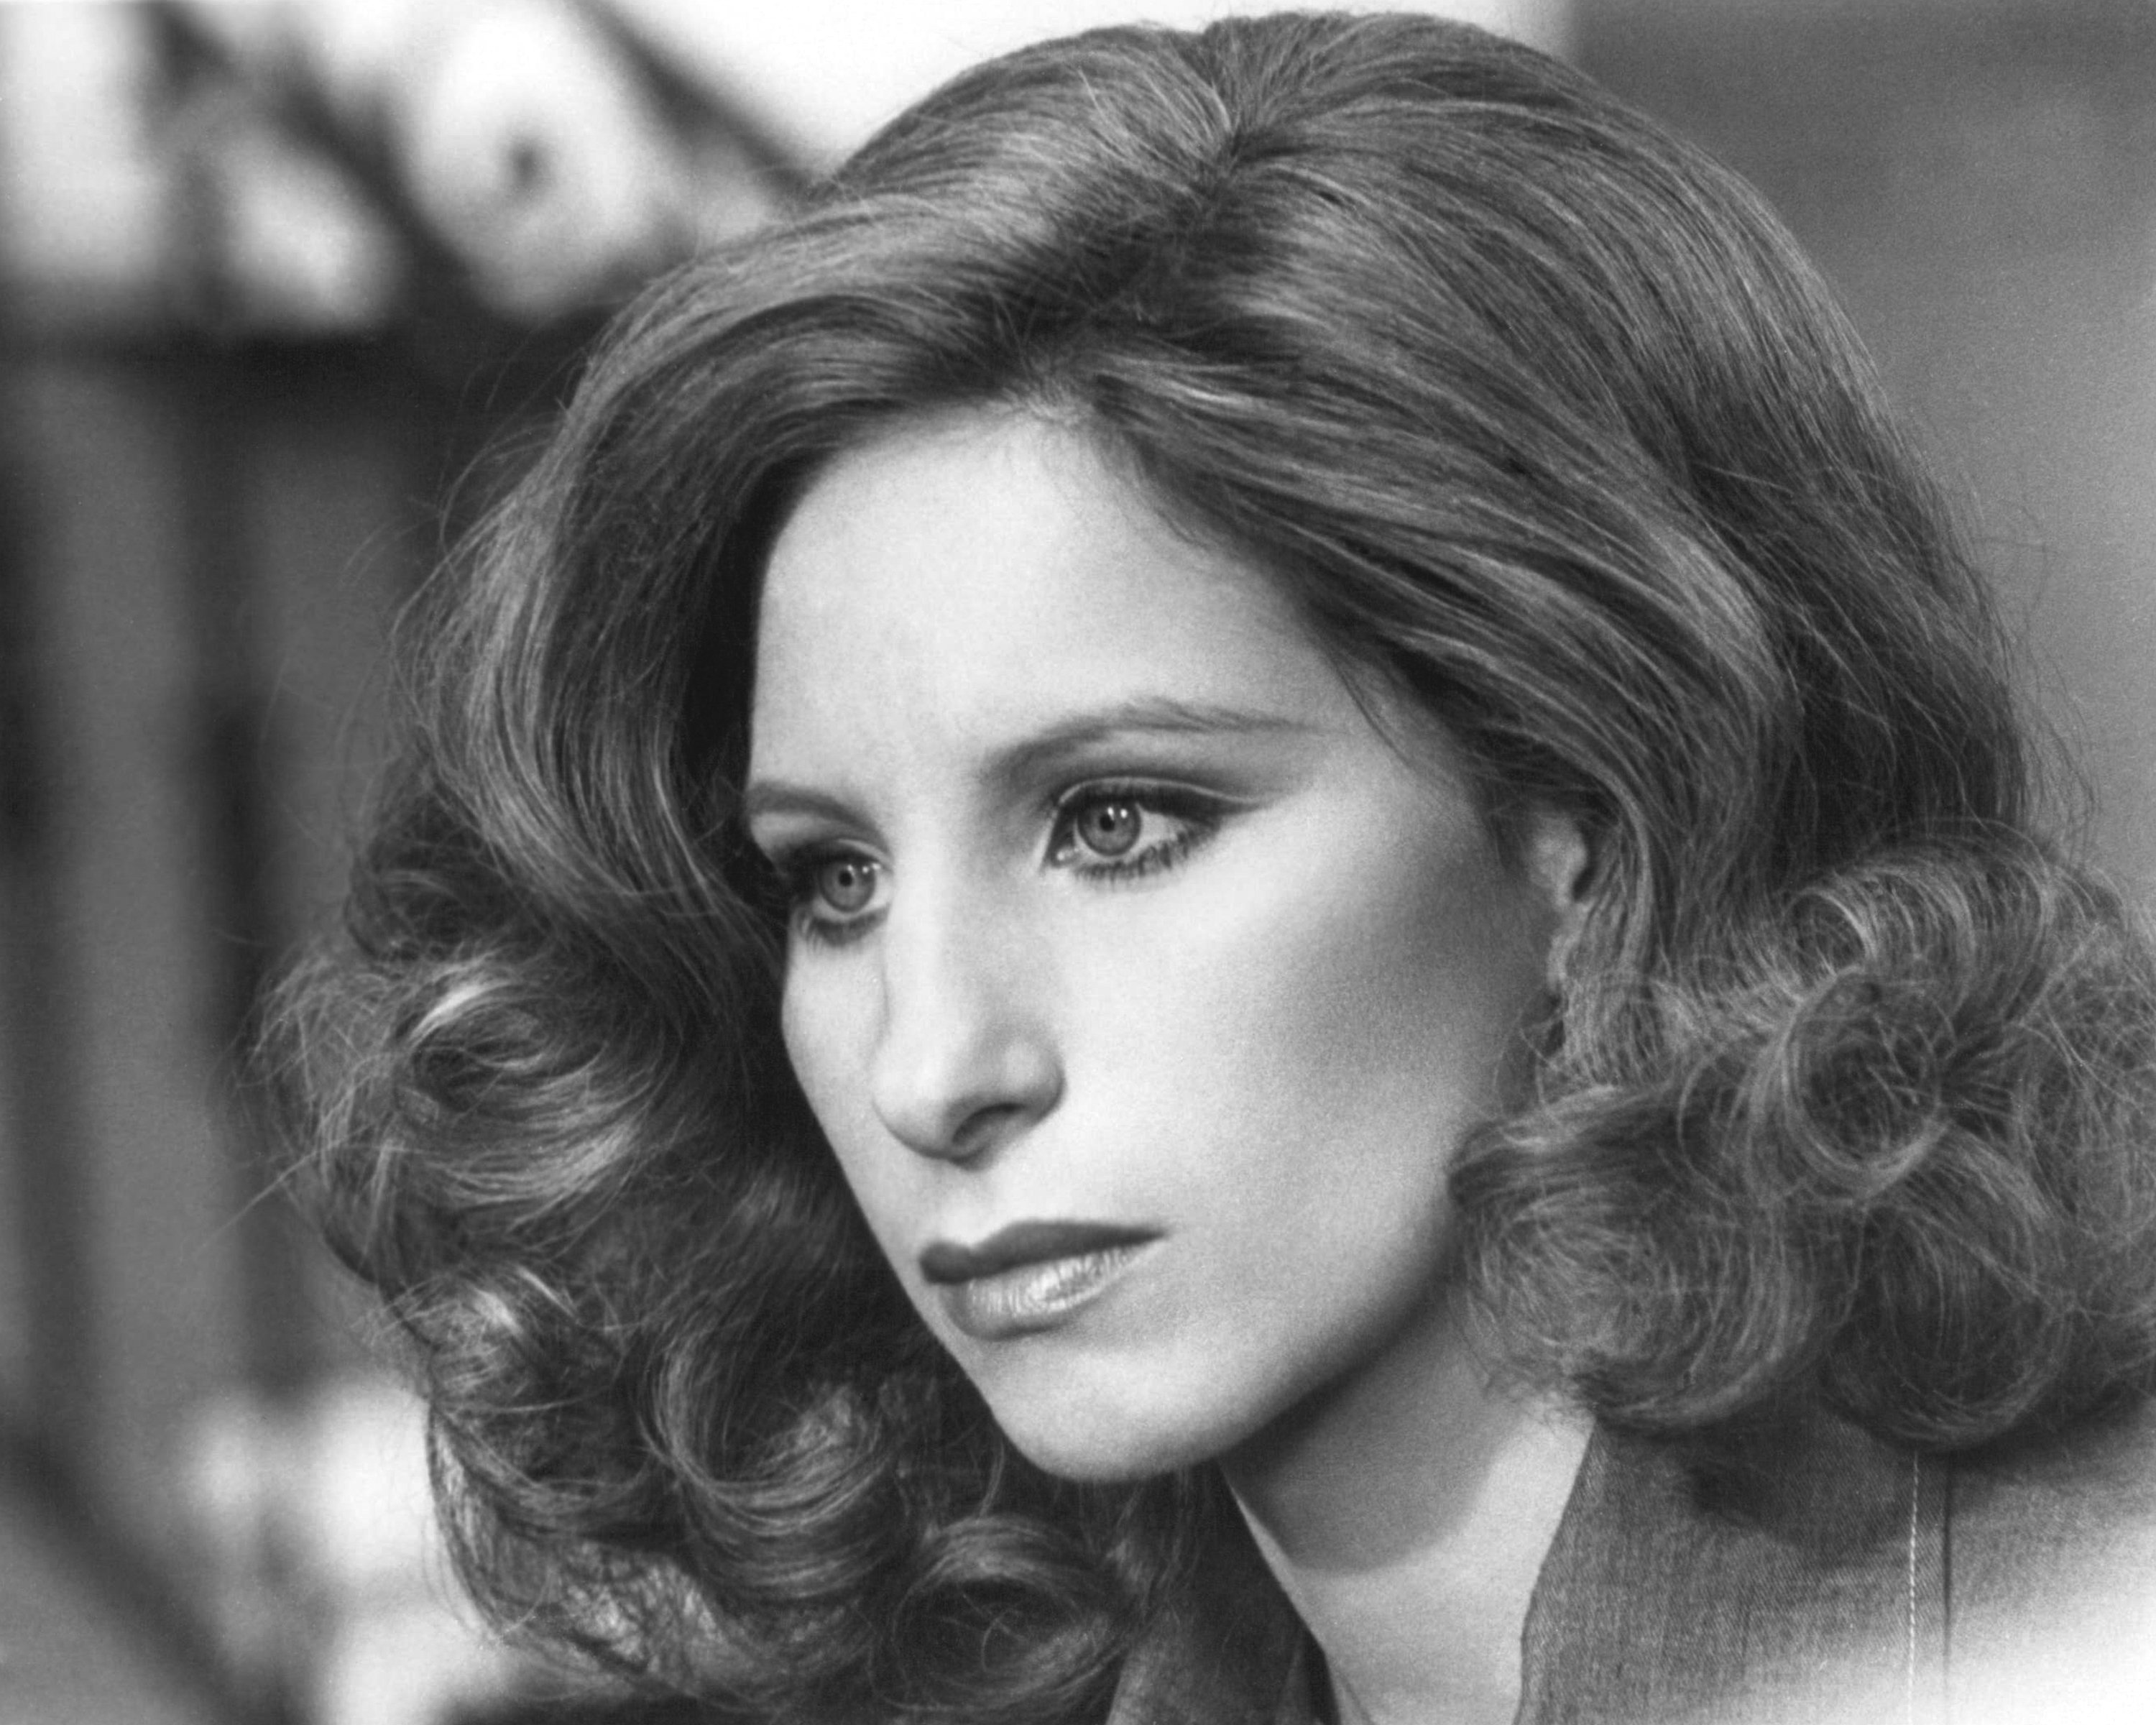 Barbra Streisand wearing eyeliner